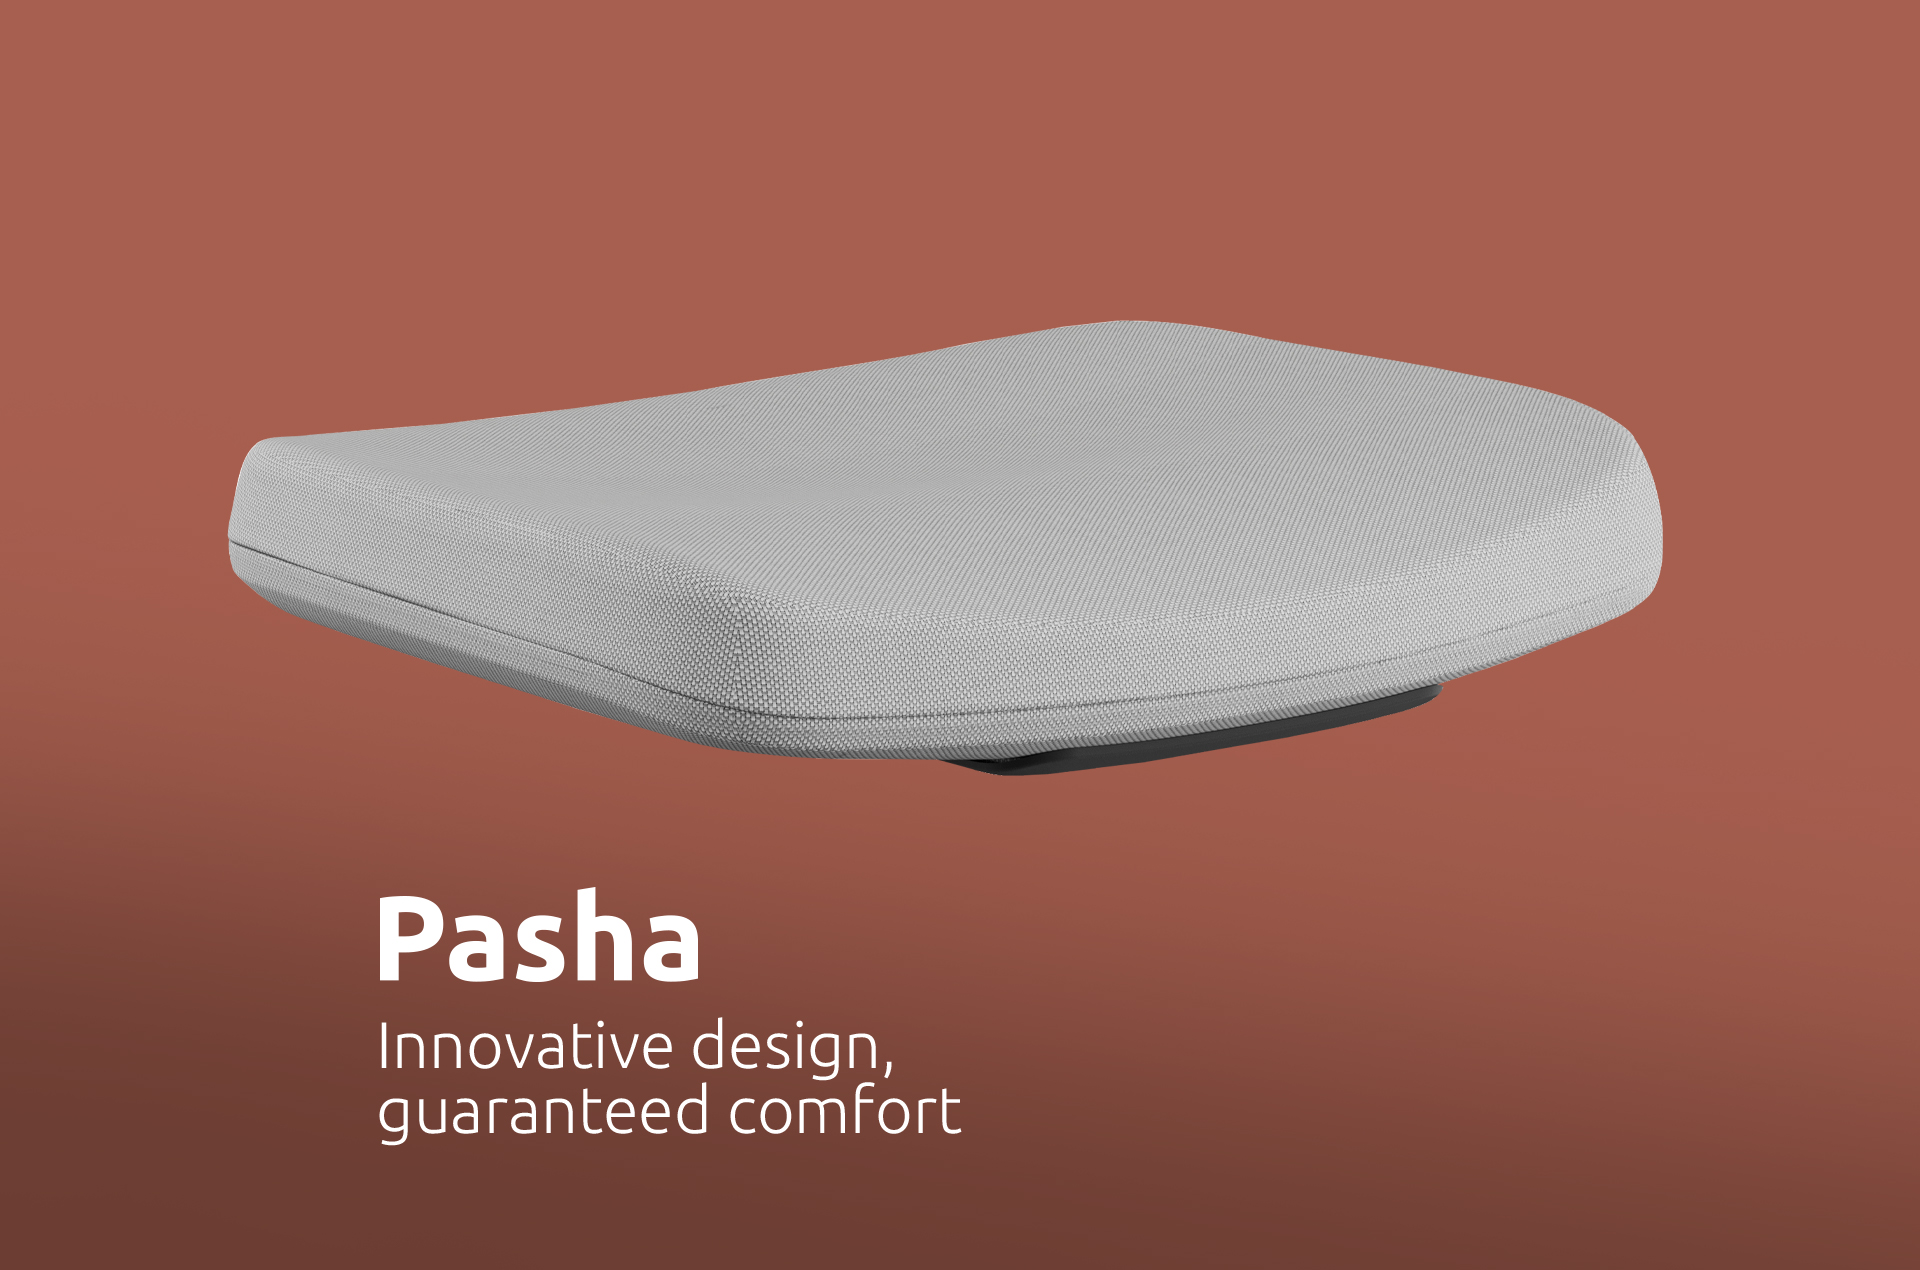  the-pasha-seat-innovative-design-guaranteed-comfort-pr_ok